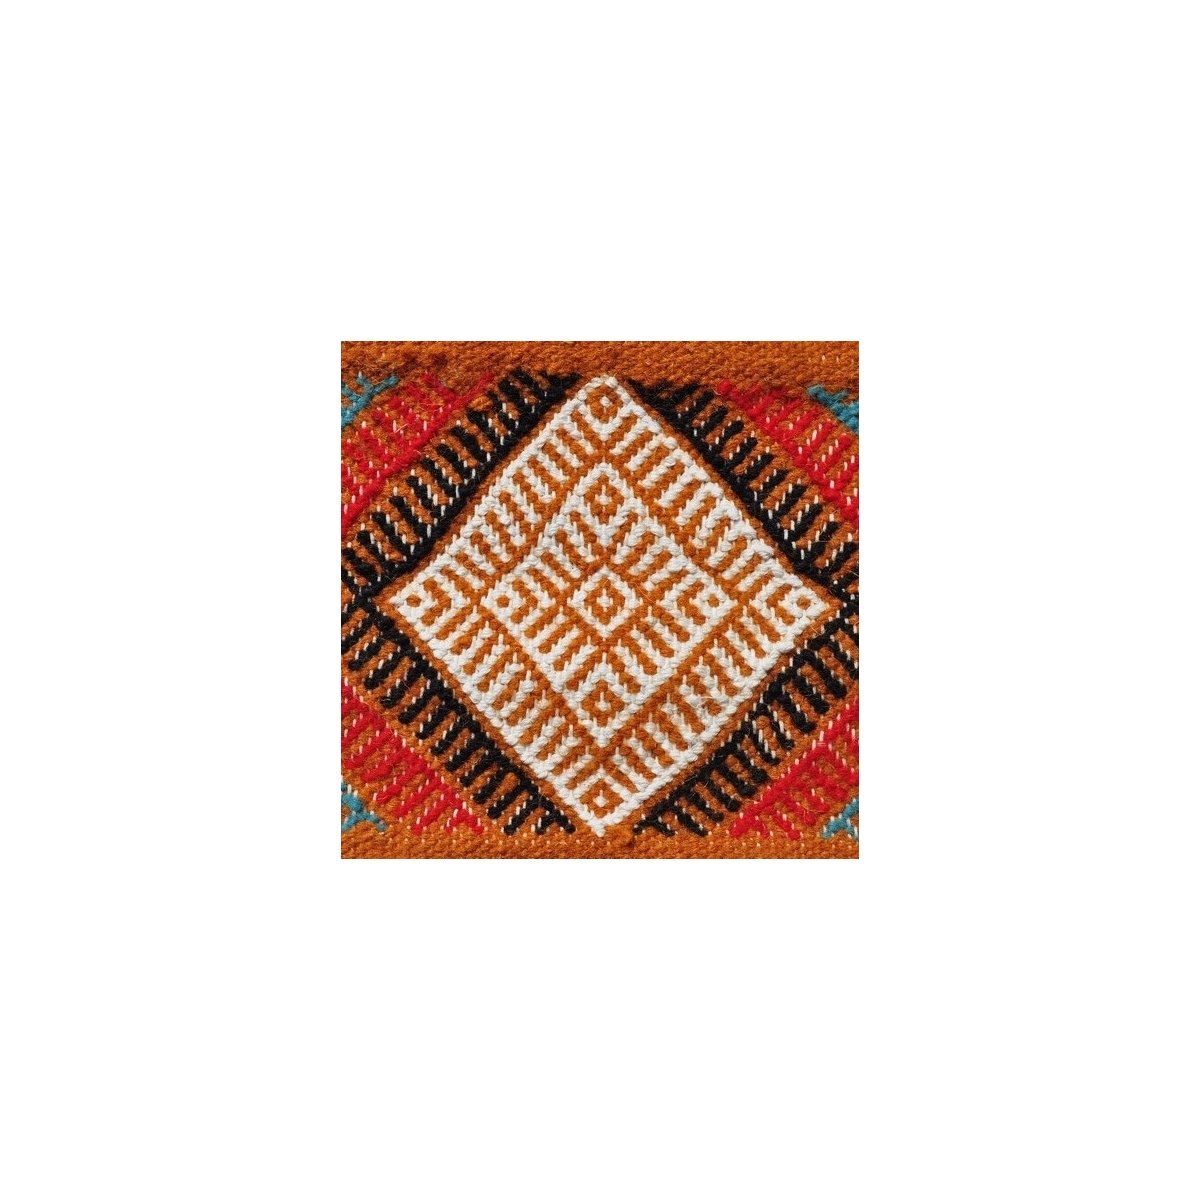 Berber tapijt Tapijt Kilim lang Kesra 65x205 Veelkleurig (Handgeweven, Wol, Tunesië) Tunesisch kilimdeken, Marokkaanse stijl. Re